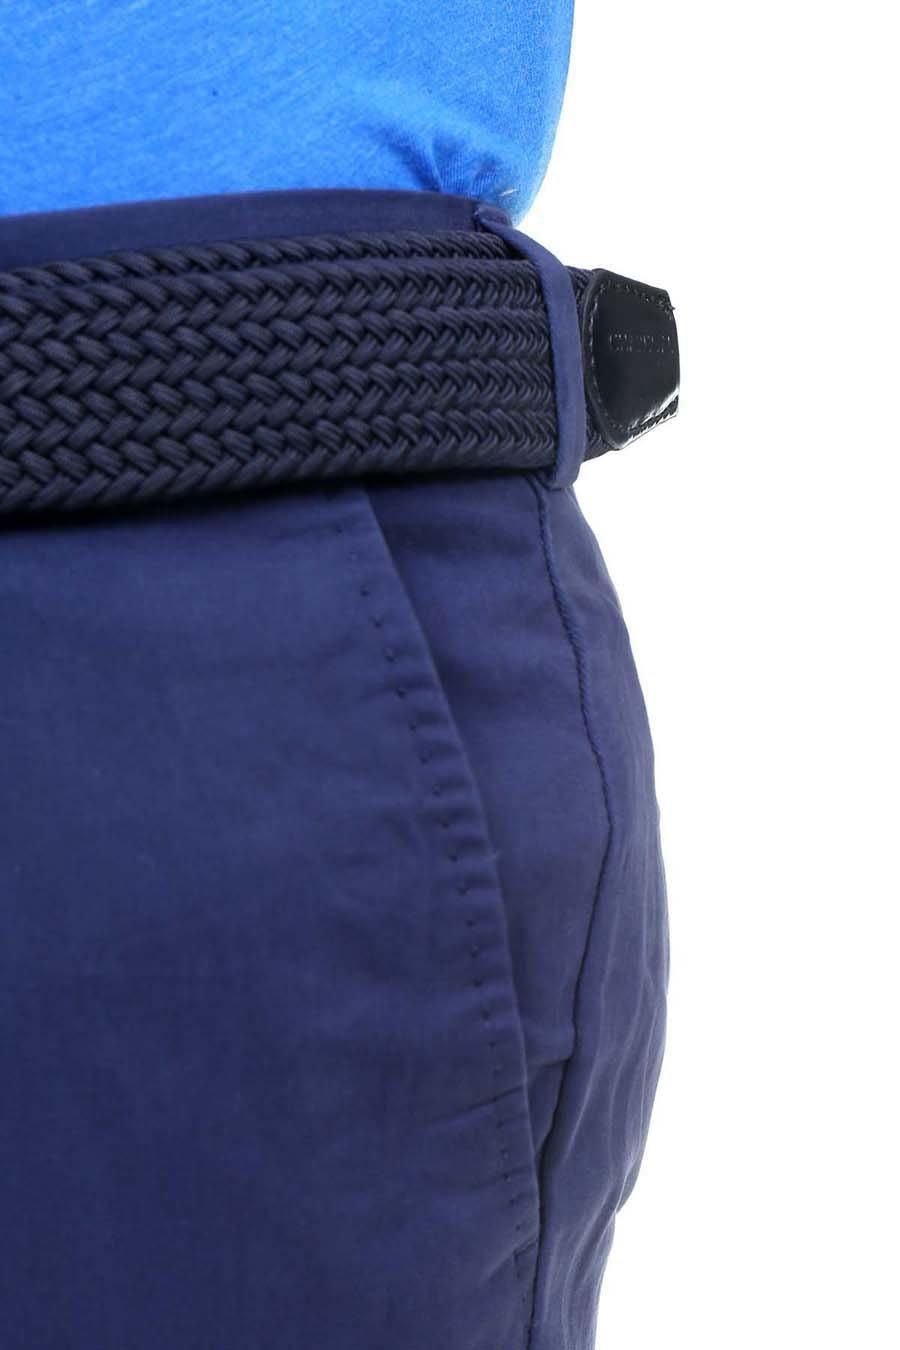 Casual Pant Cross Pocket Navy - Slim Fit at Charcoal Clothing